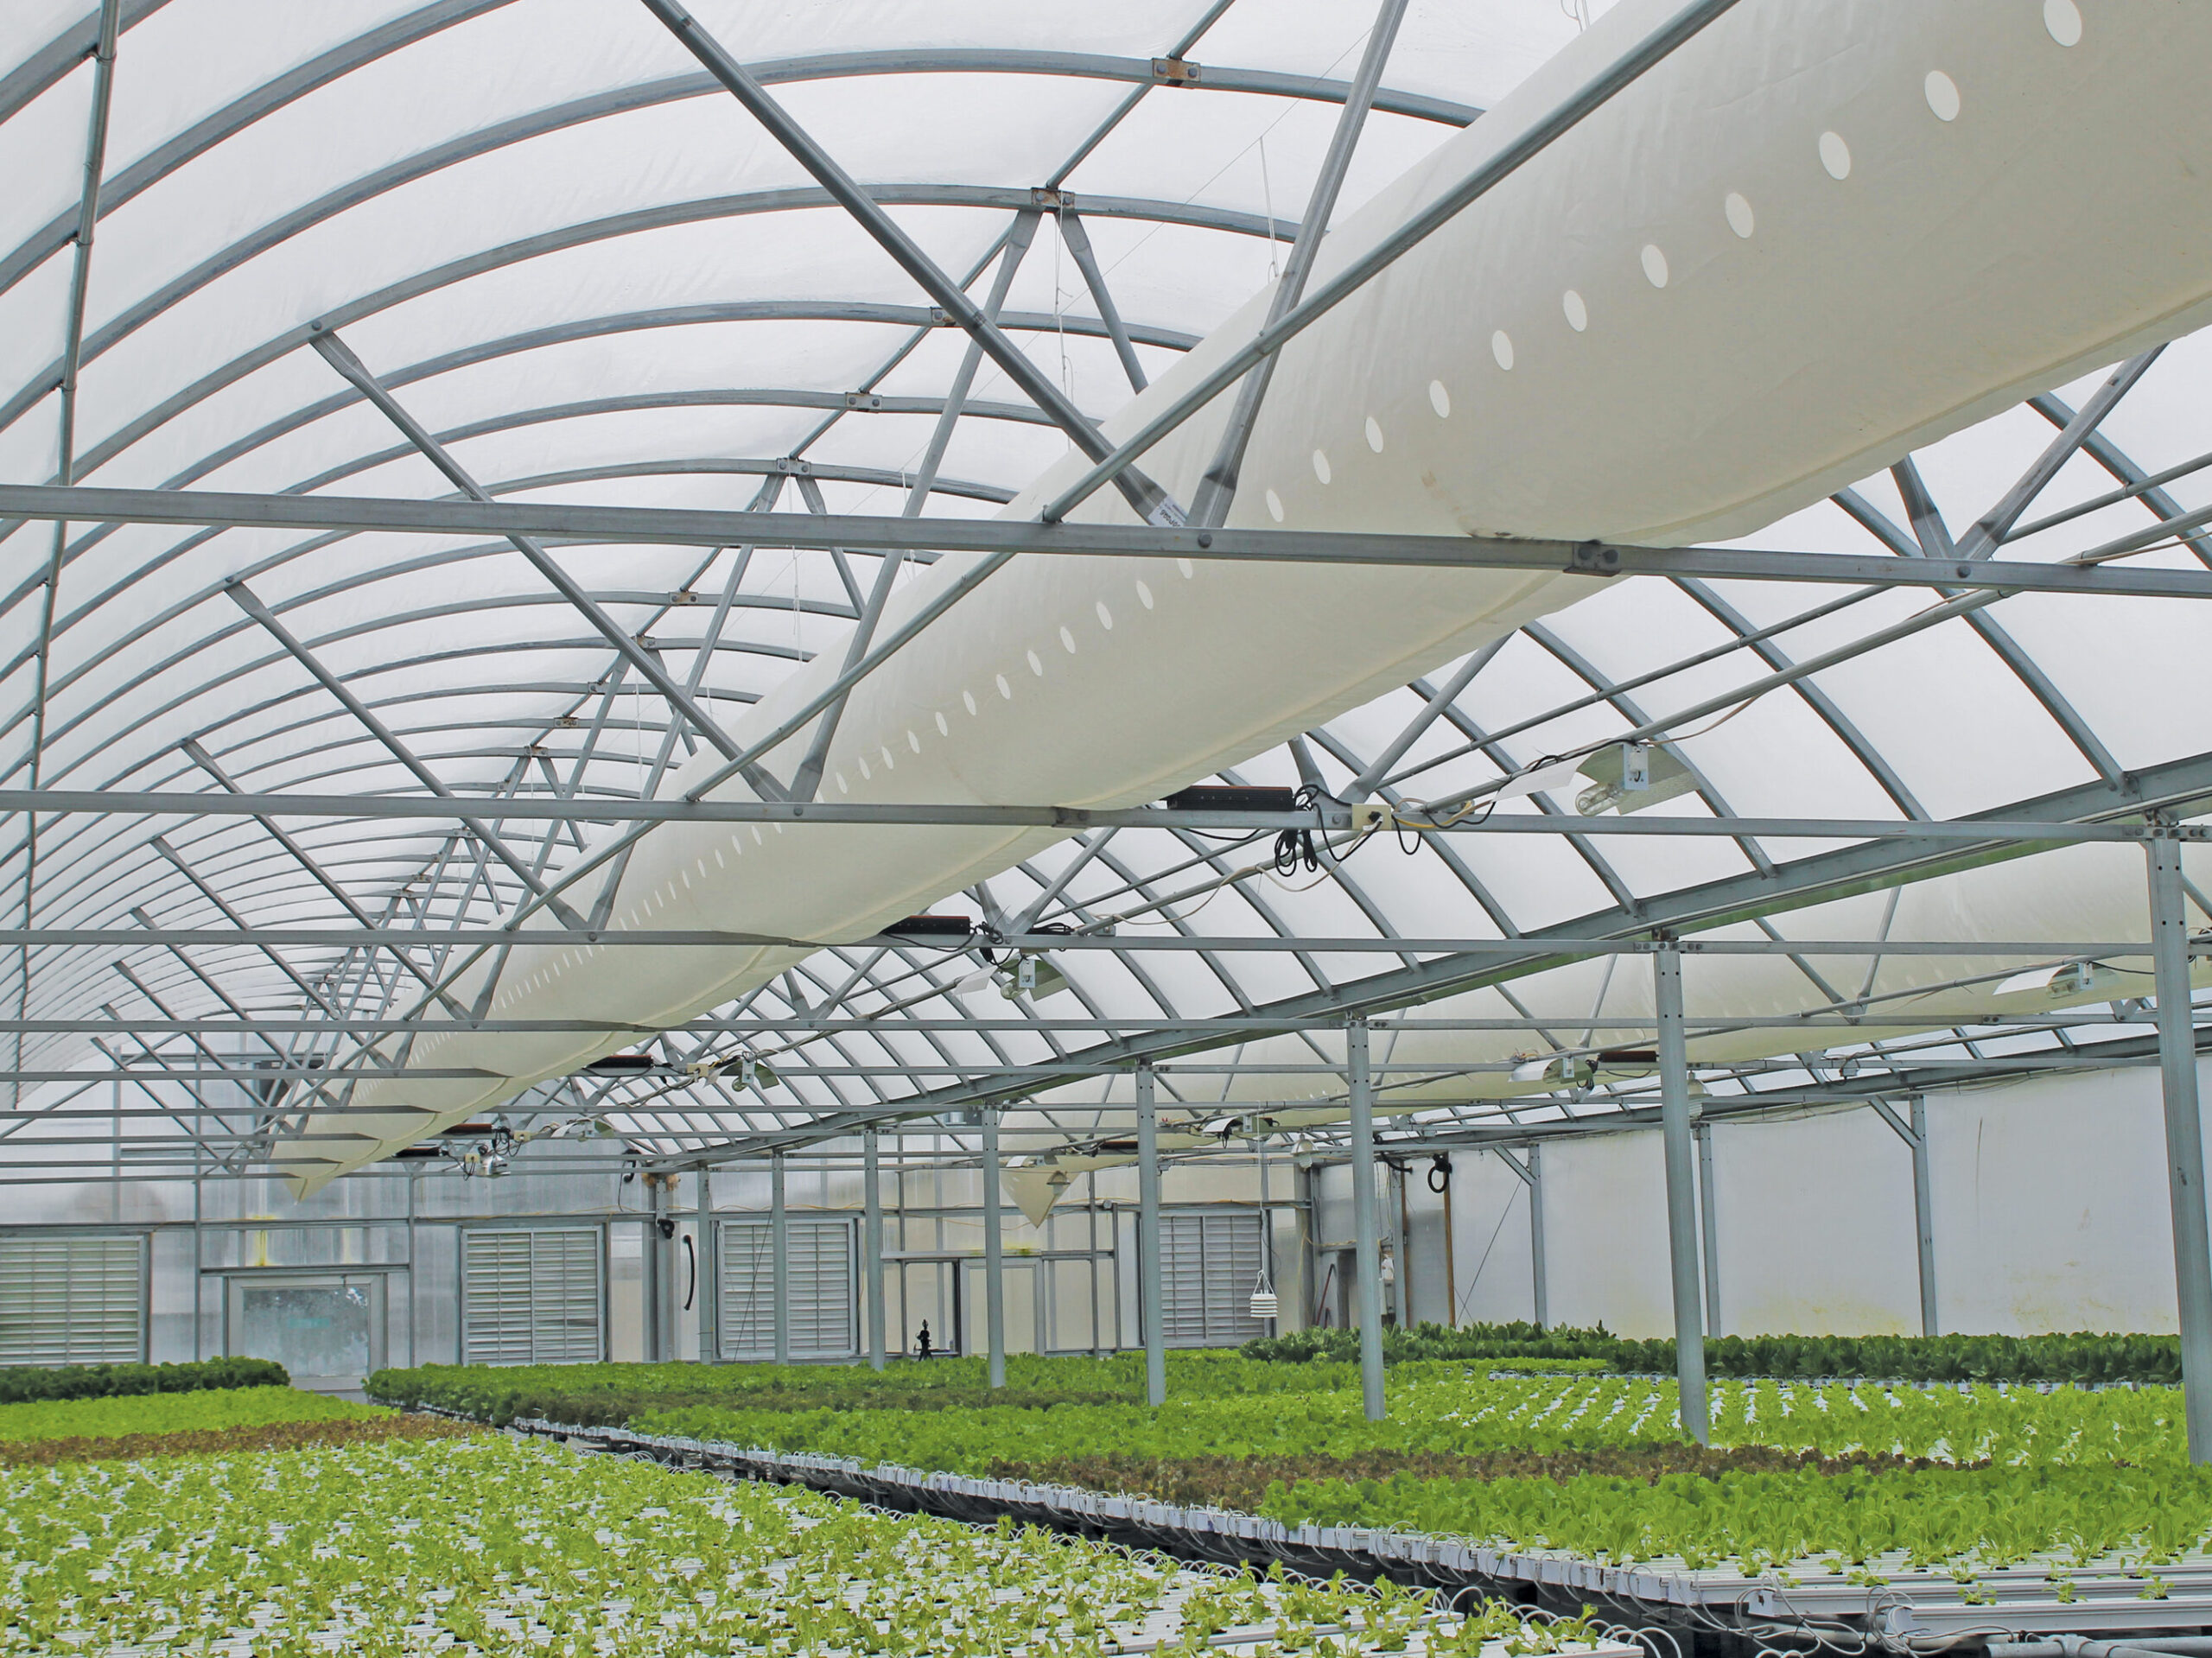 inside of greenhouse farming operation